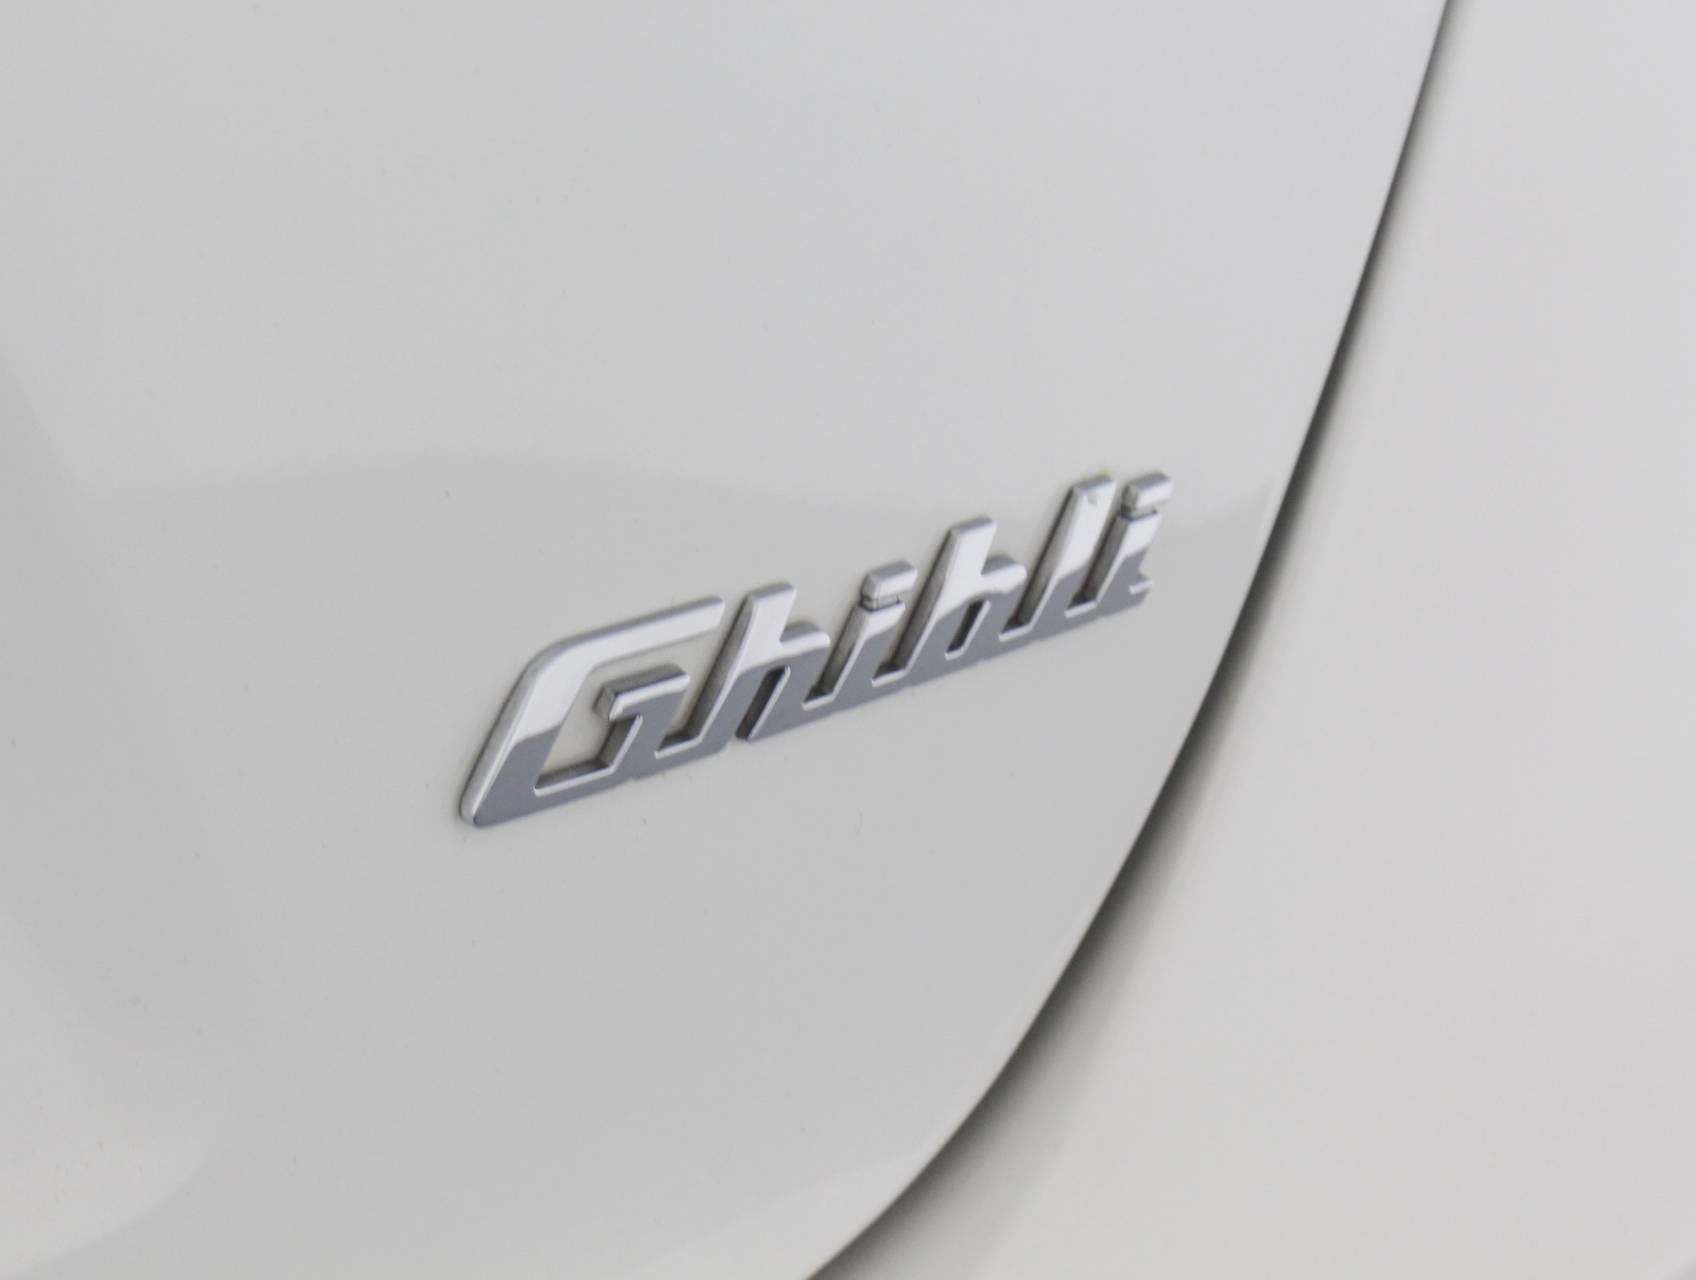 Florida Fine Cars - Used MASERATI GHIBLI 2015 HOLLYWOOD S Q4